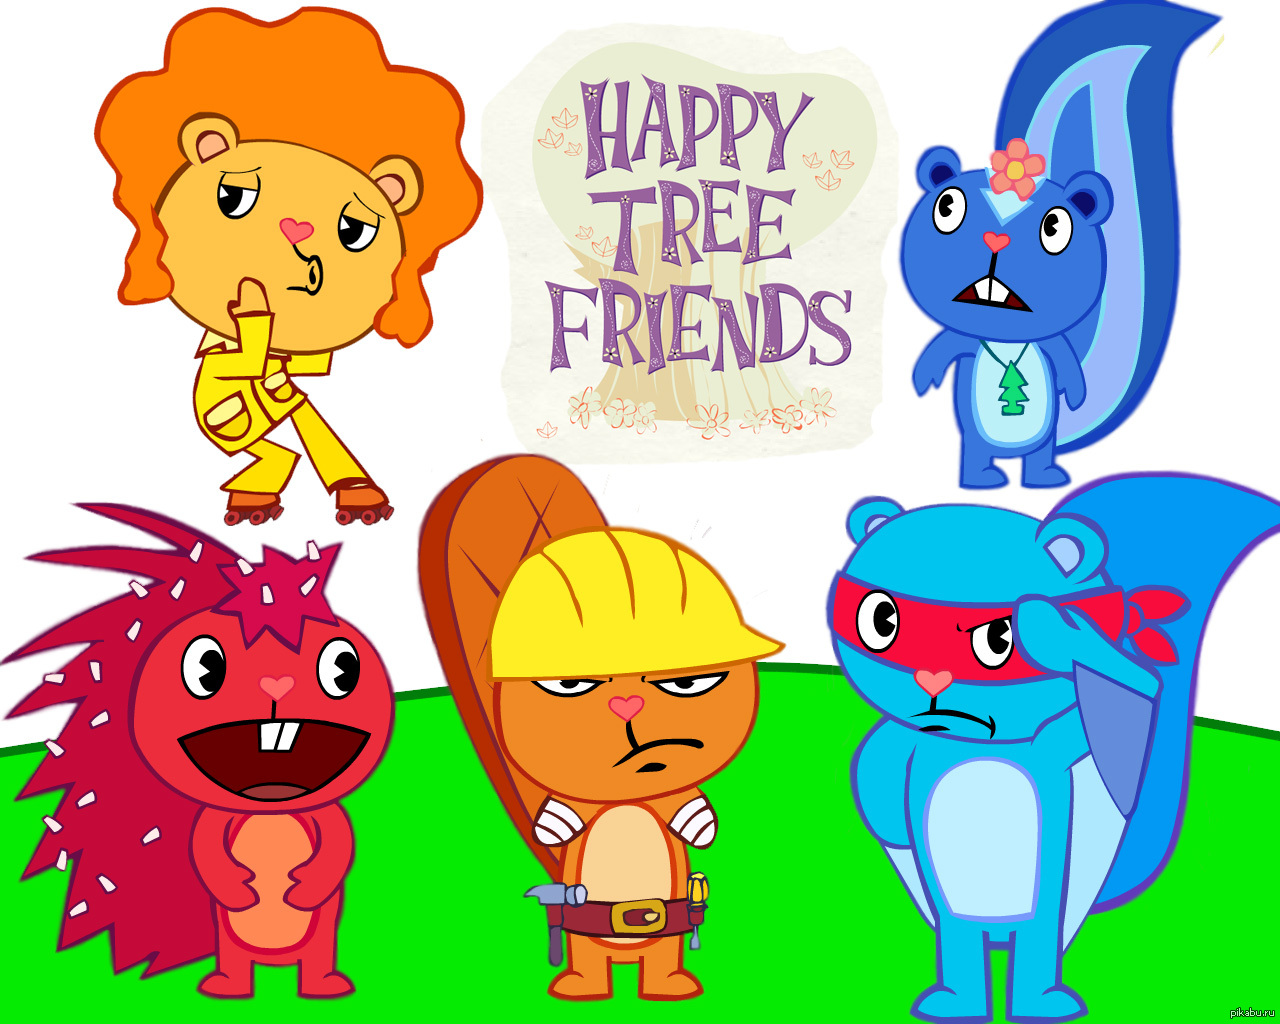 Happy tree friends 2000